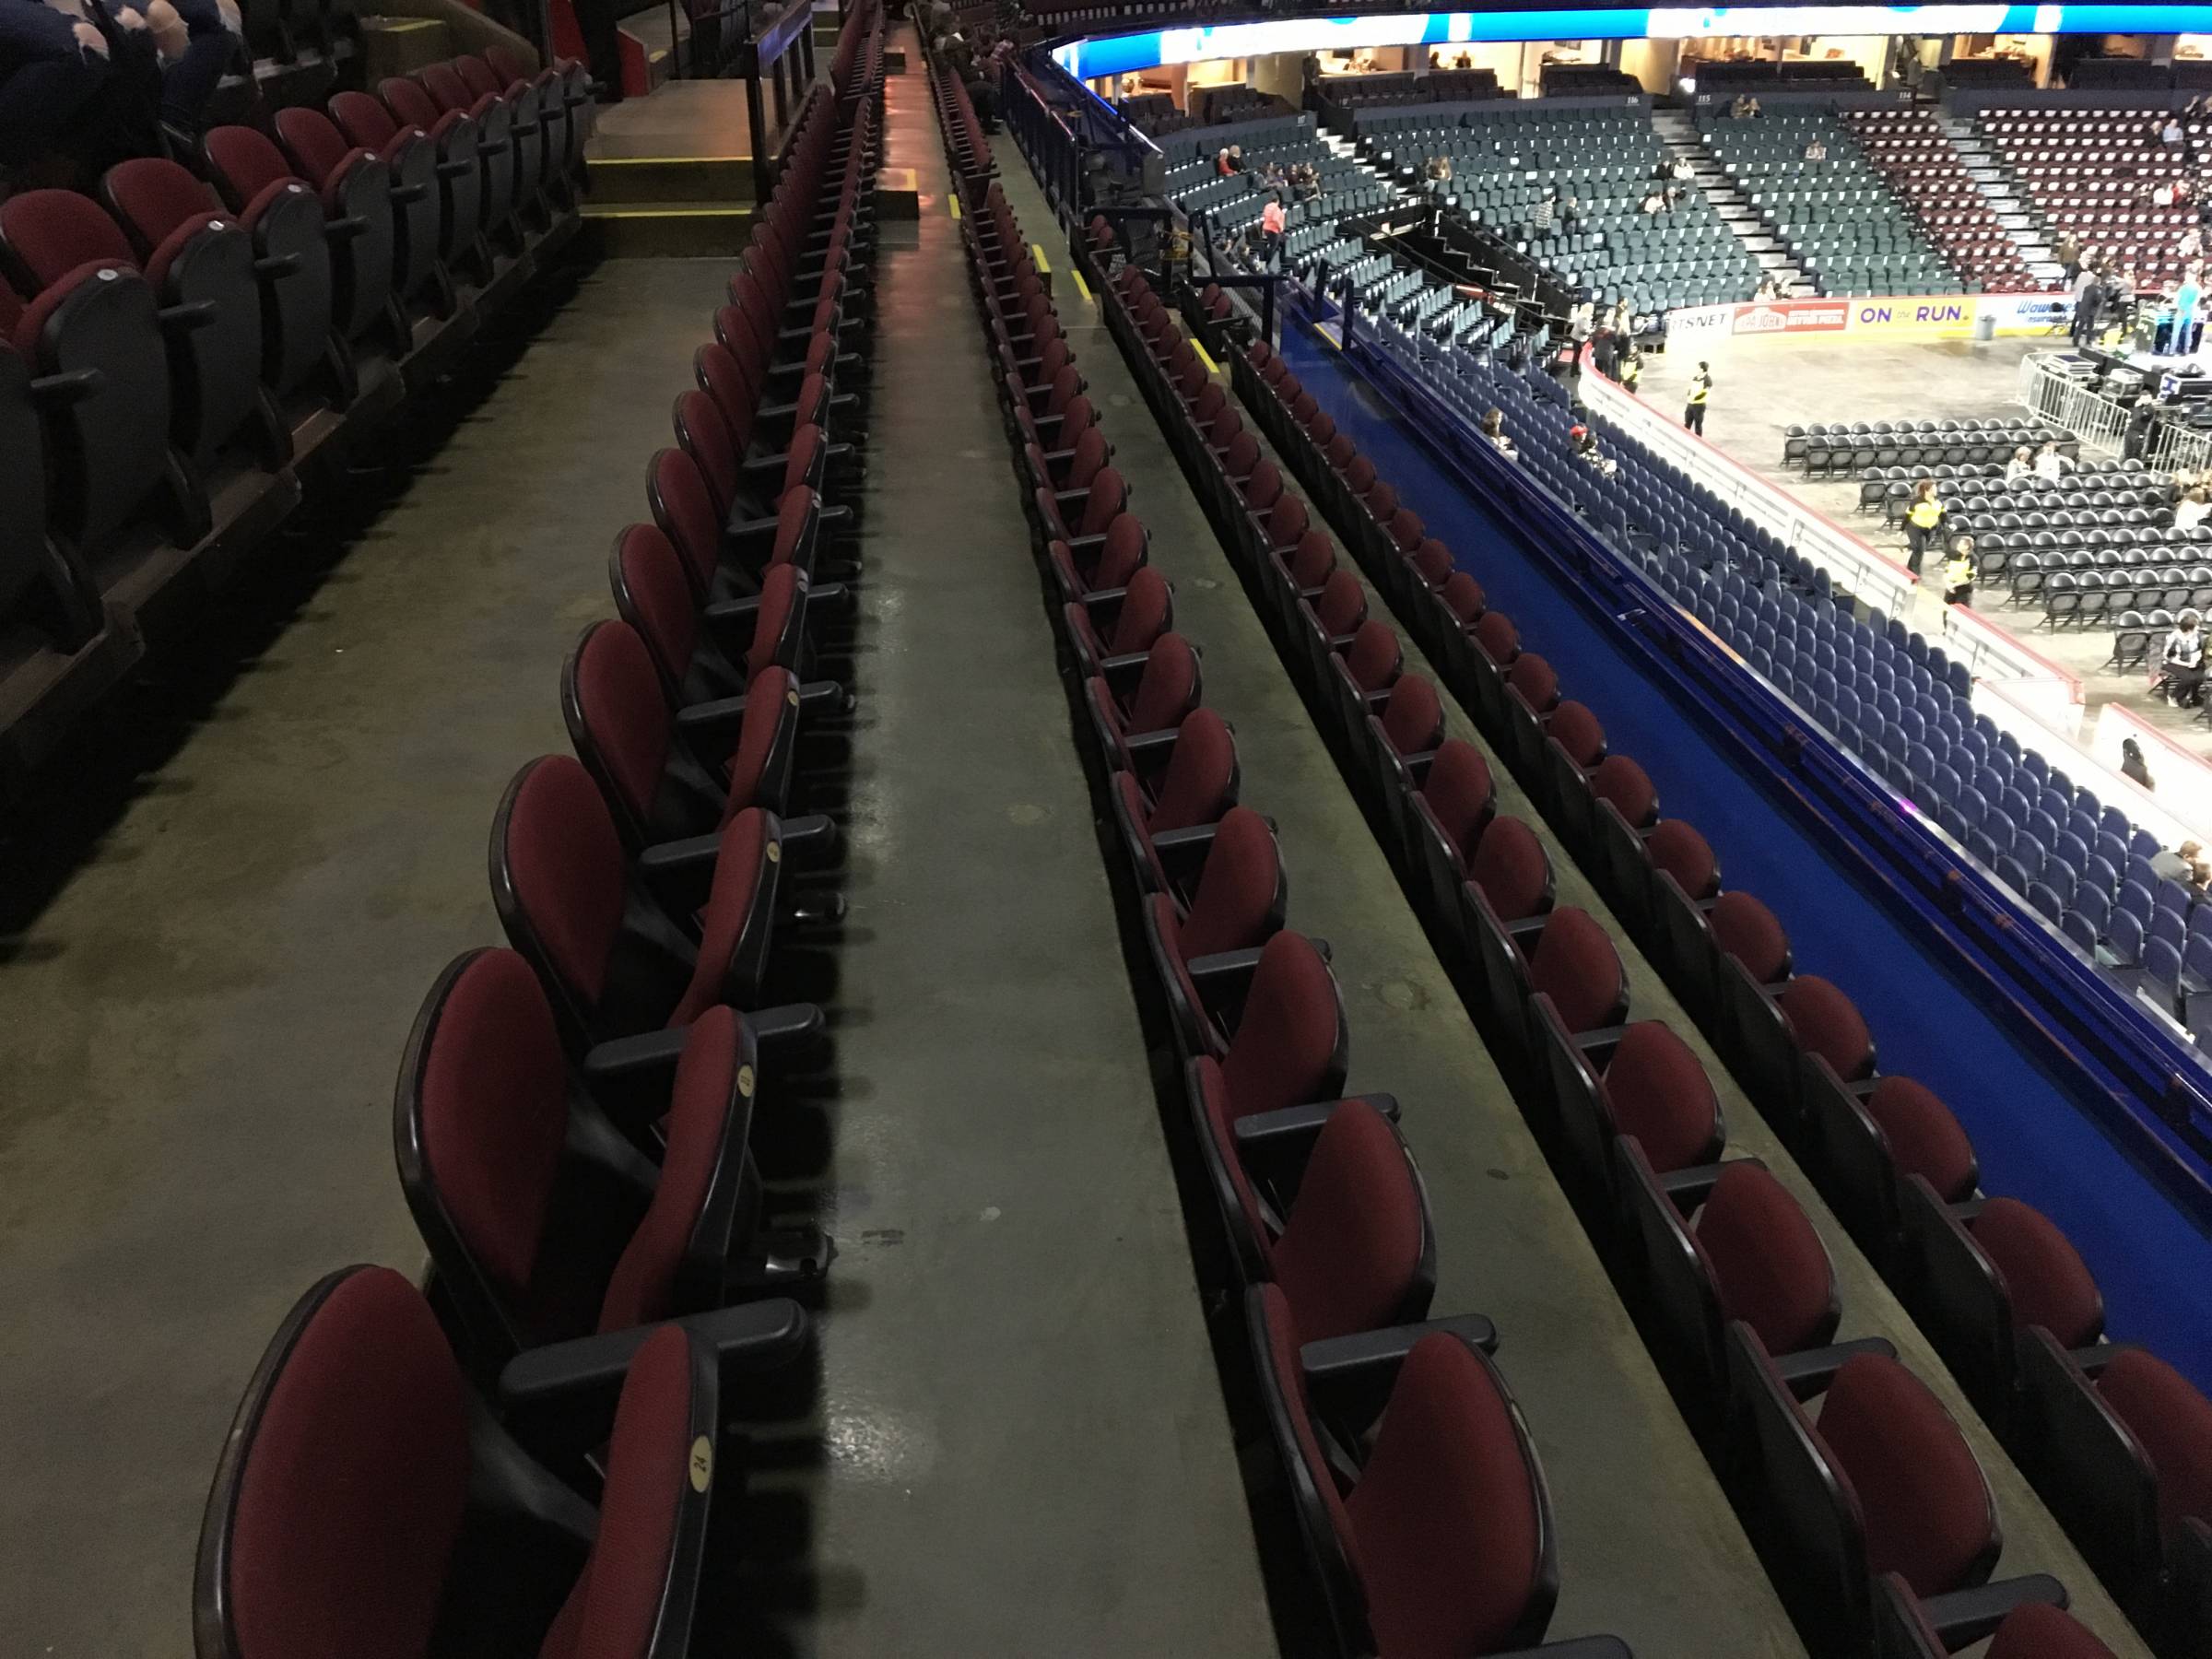 Standard Seats at Scotiabank Saddledome